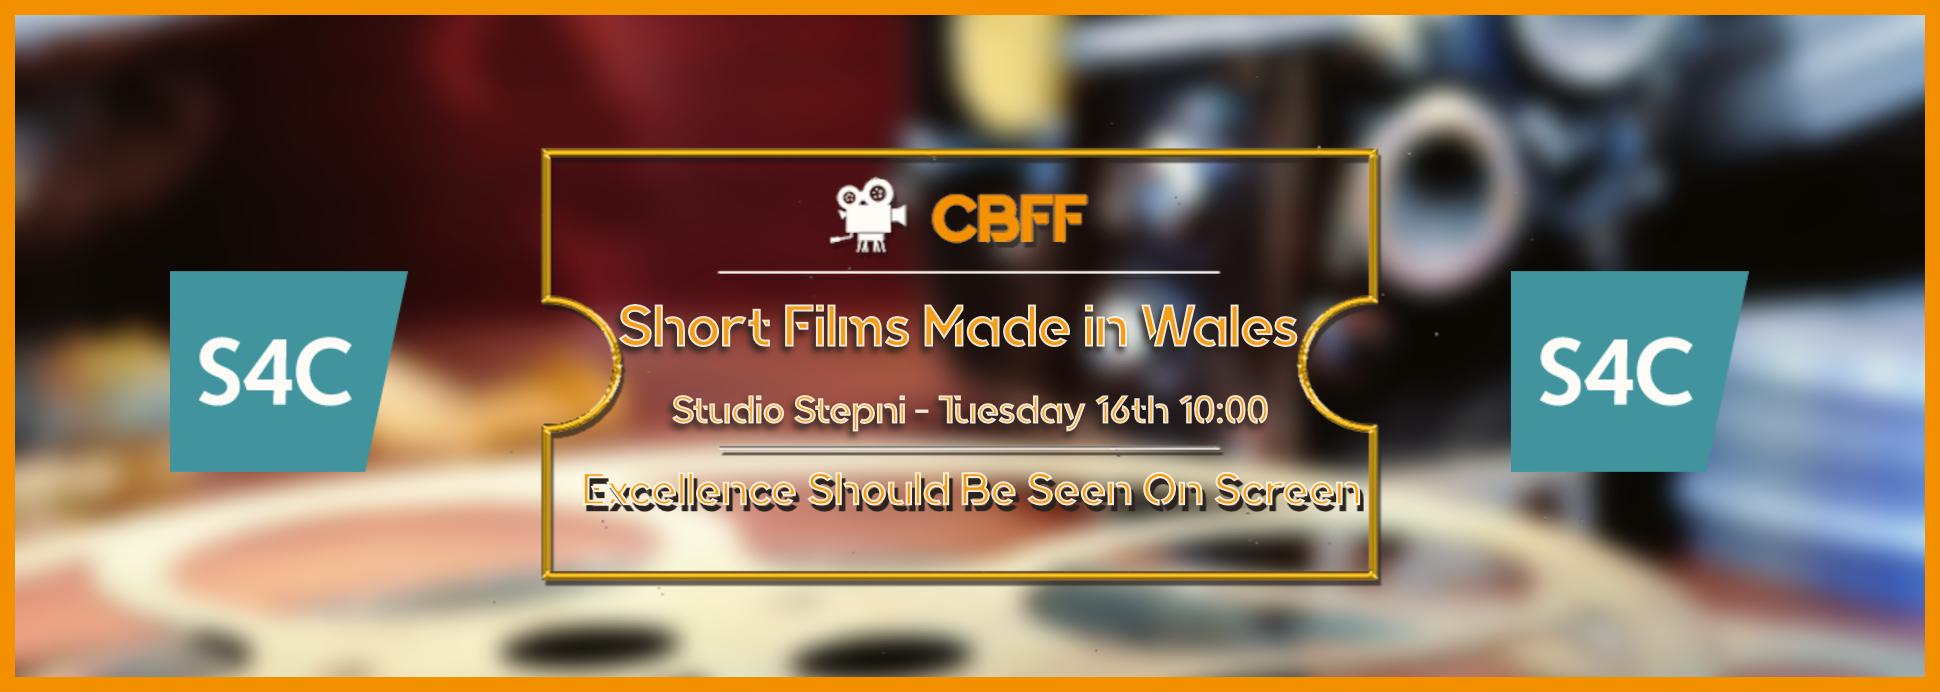 Studio Stepni Short Film Made in Wales 16th 10:00